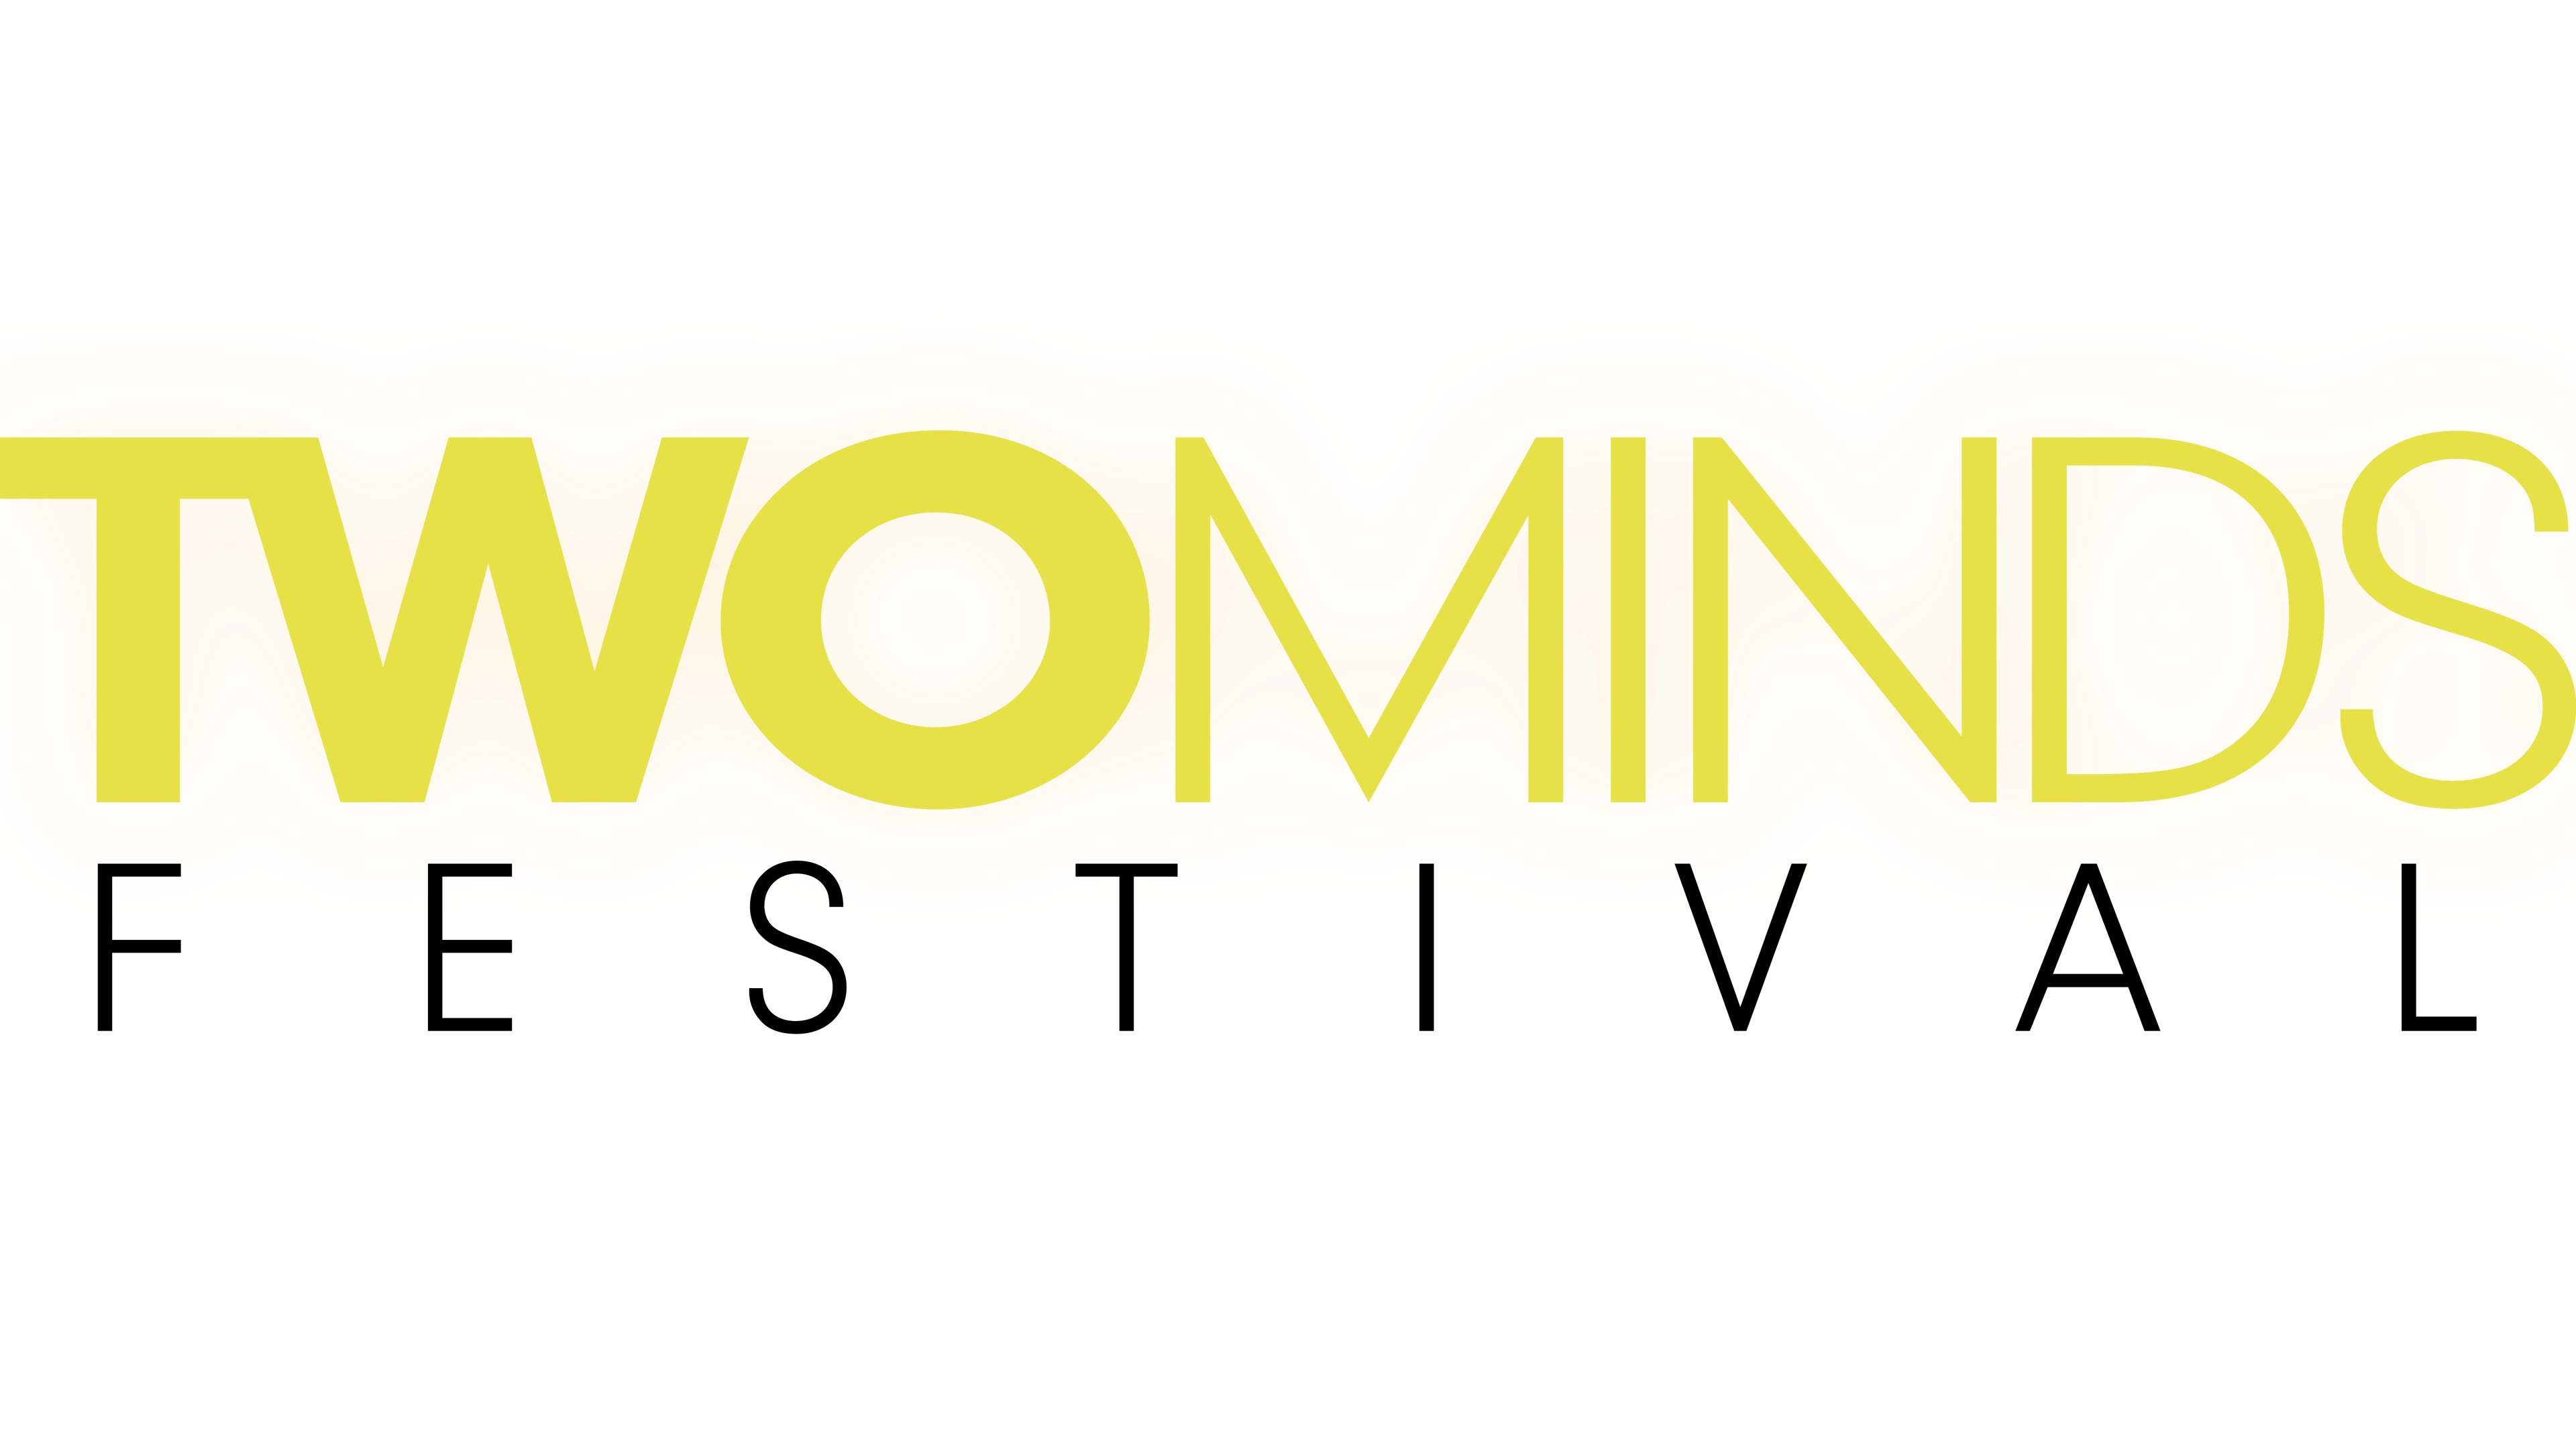 Twominds Festival logo